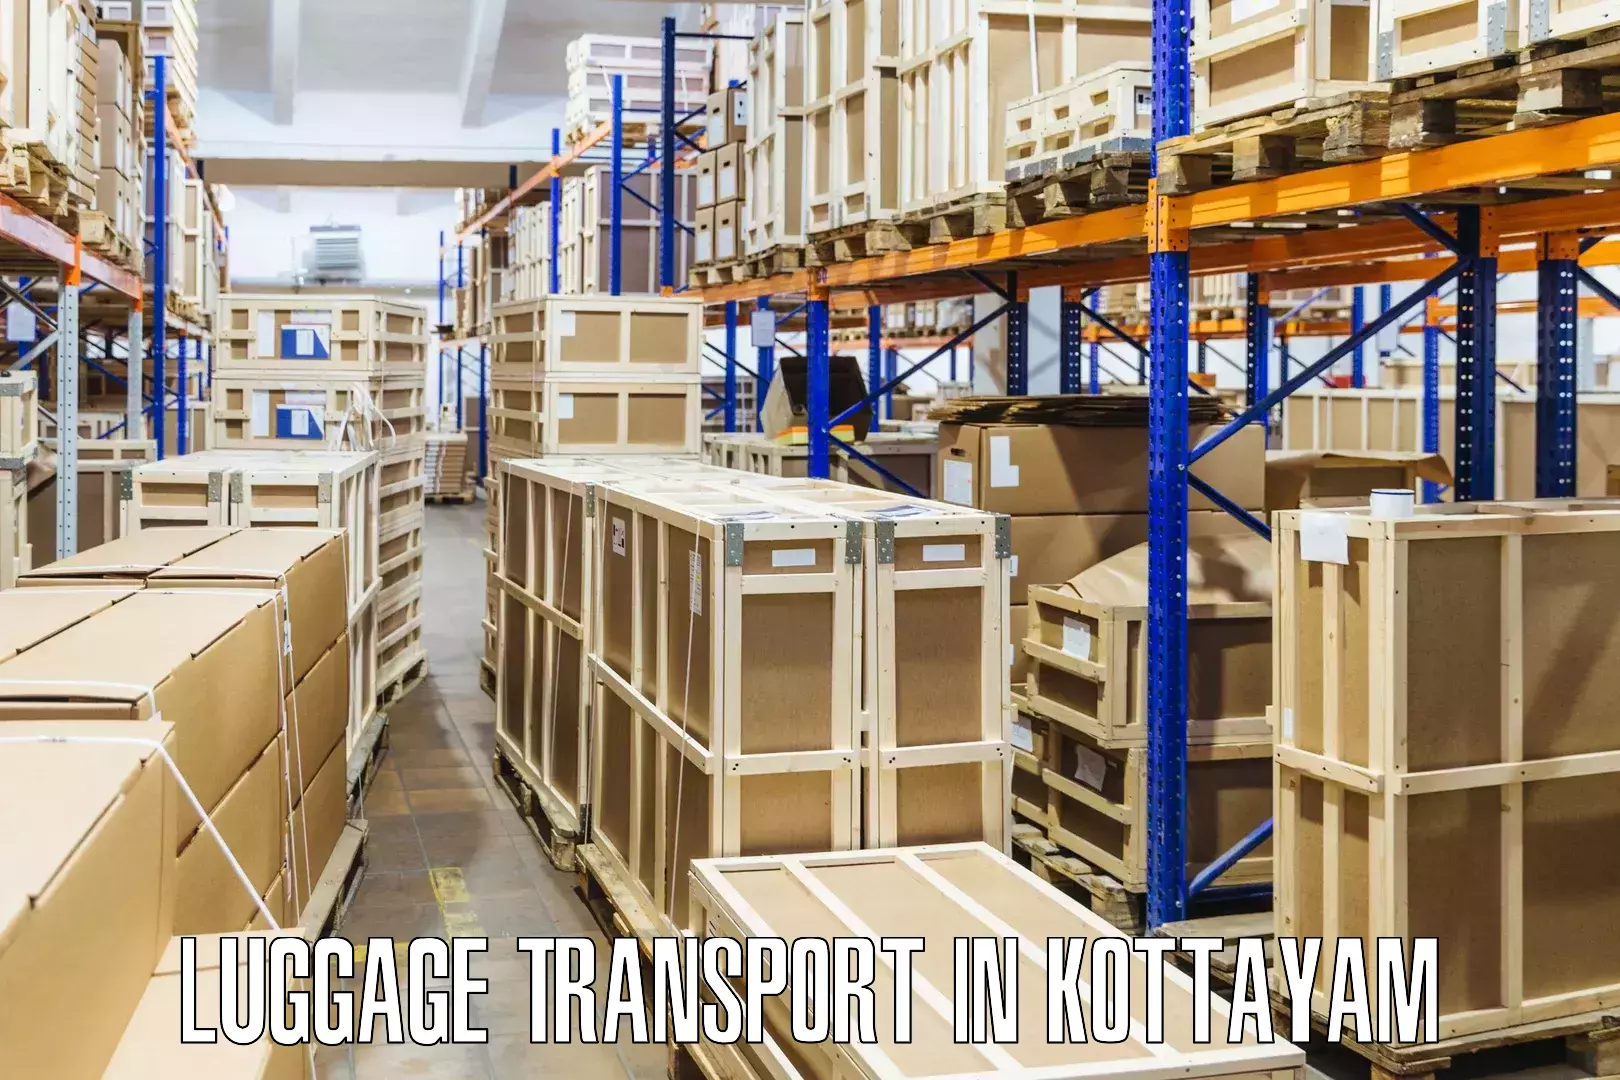 Heavy luggage shipping in Kottayam